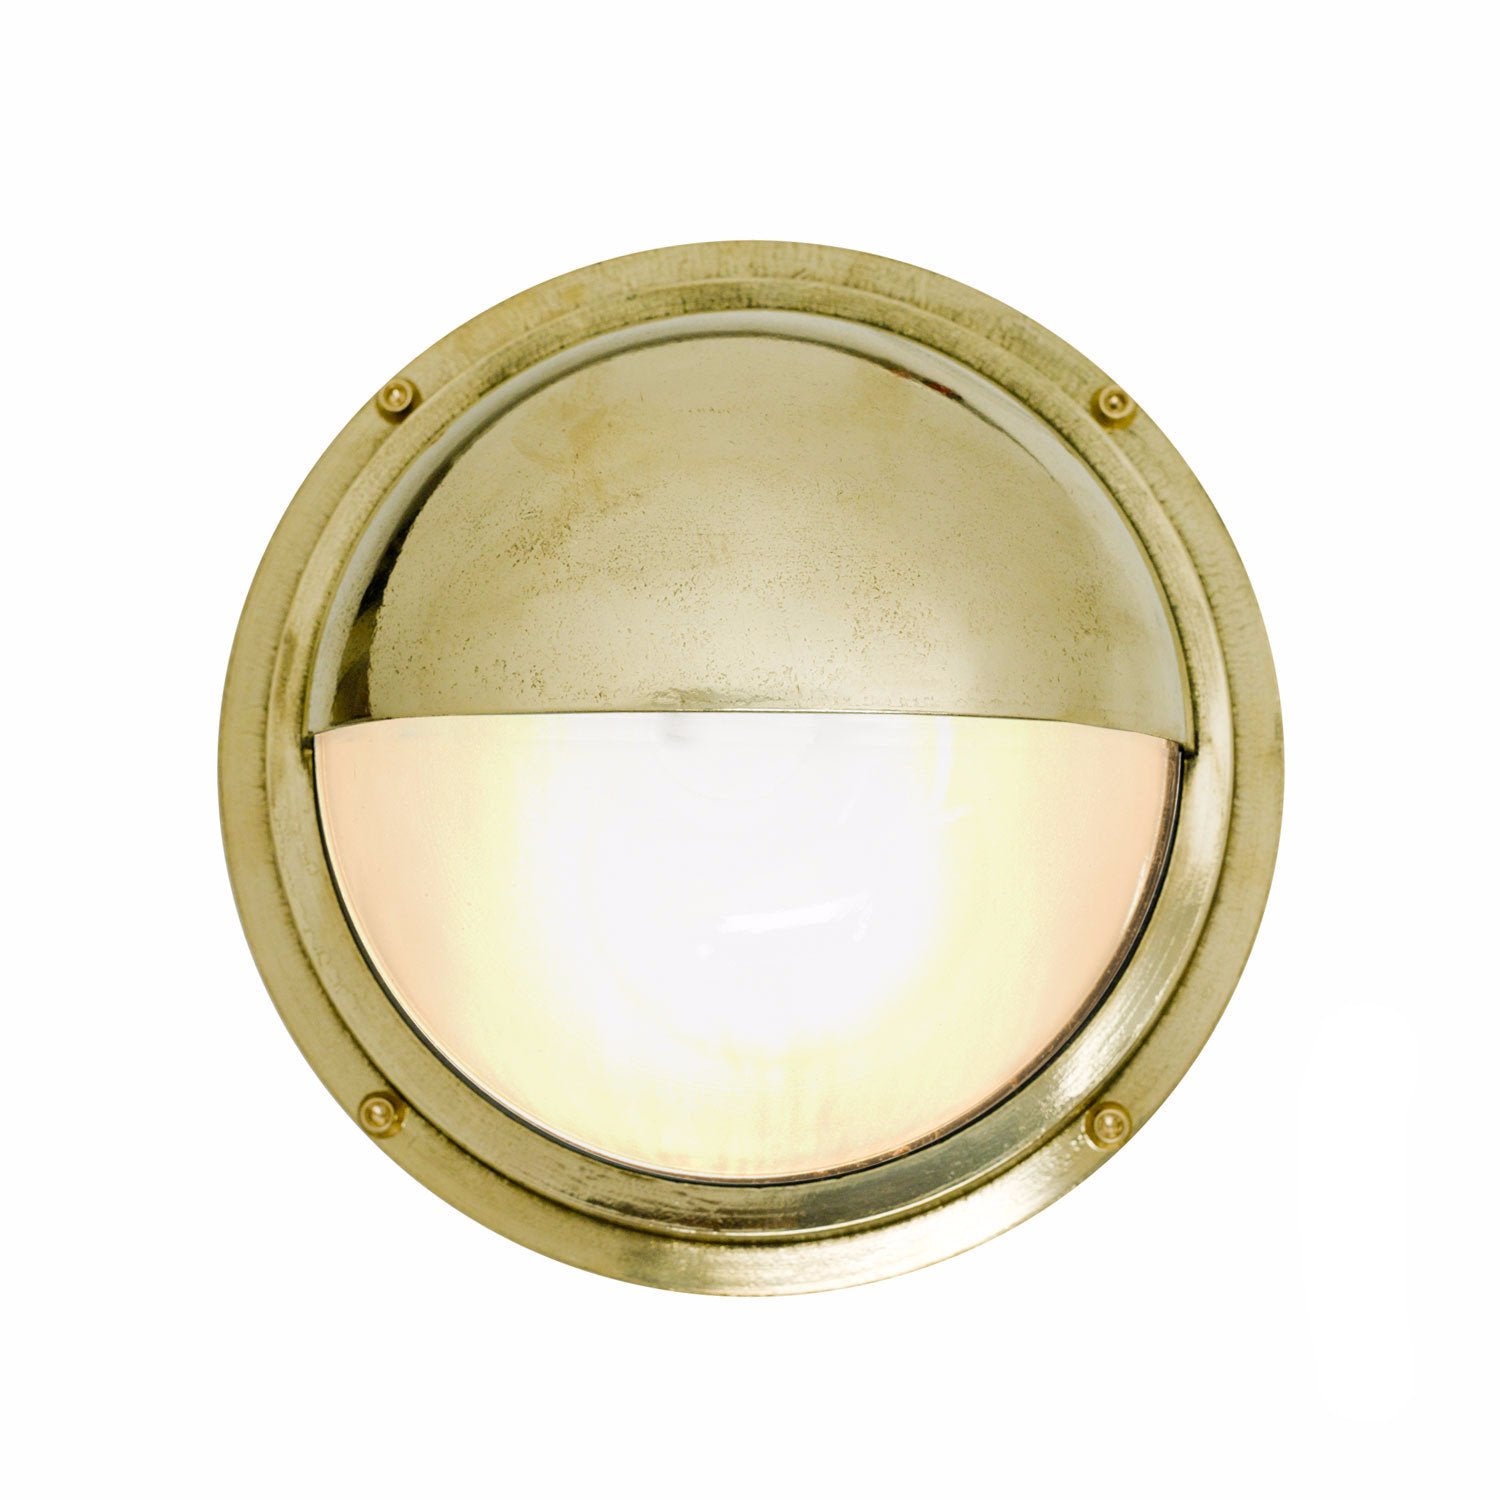 Brass Bulkhead Wall Lamp With Eyelid Shield, no. 7225